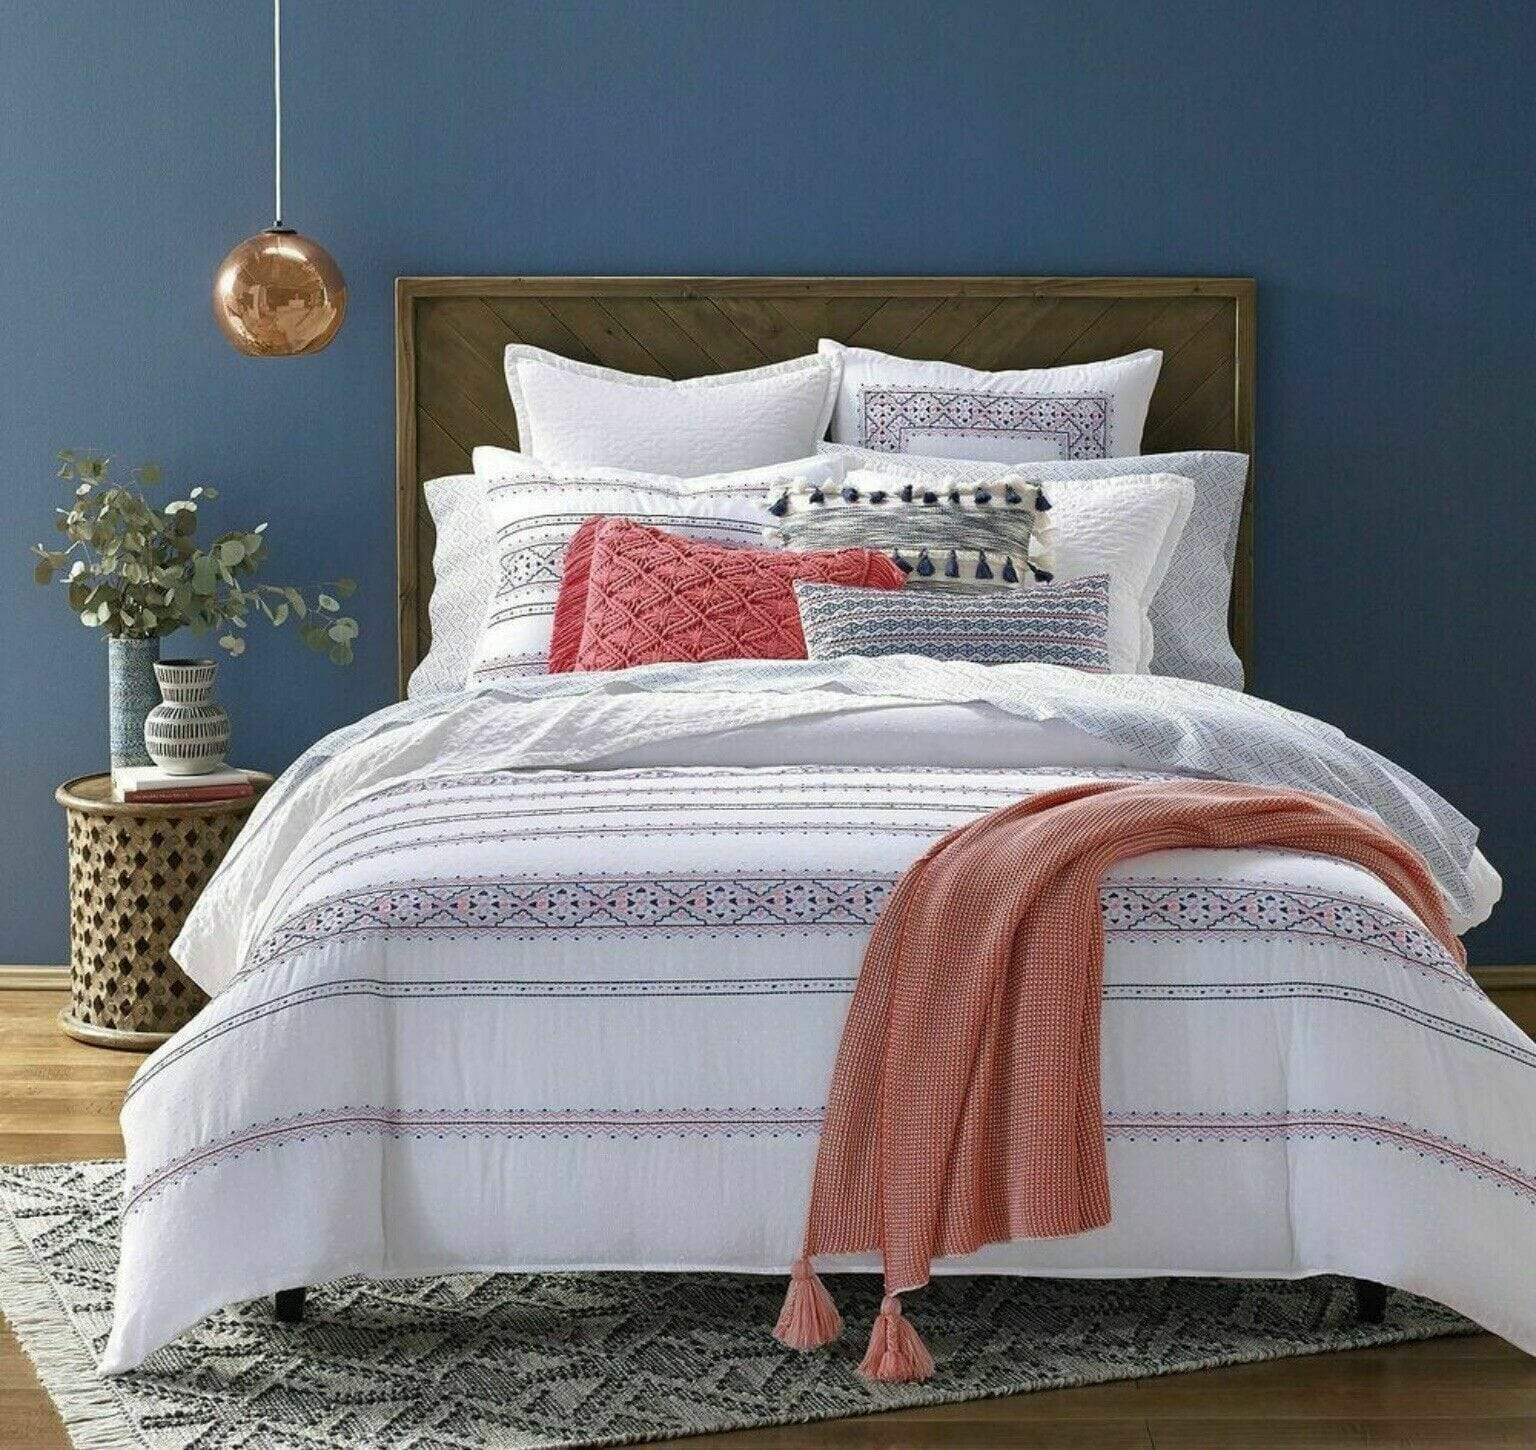 Sky Comforter/Quilt/Duvet Full Queen / White with Pink, Black, Blue Embroidery SKY - Aztec Print Duvet Cover Set